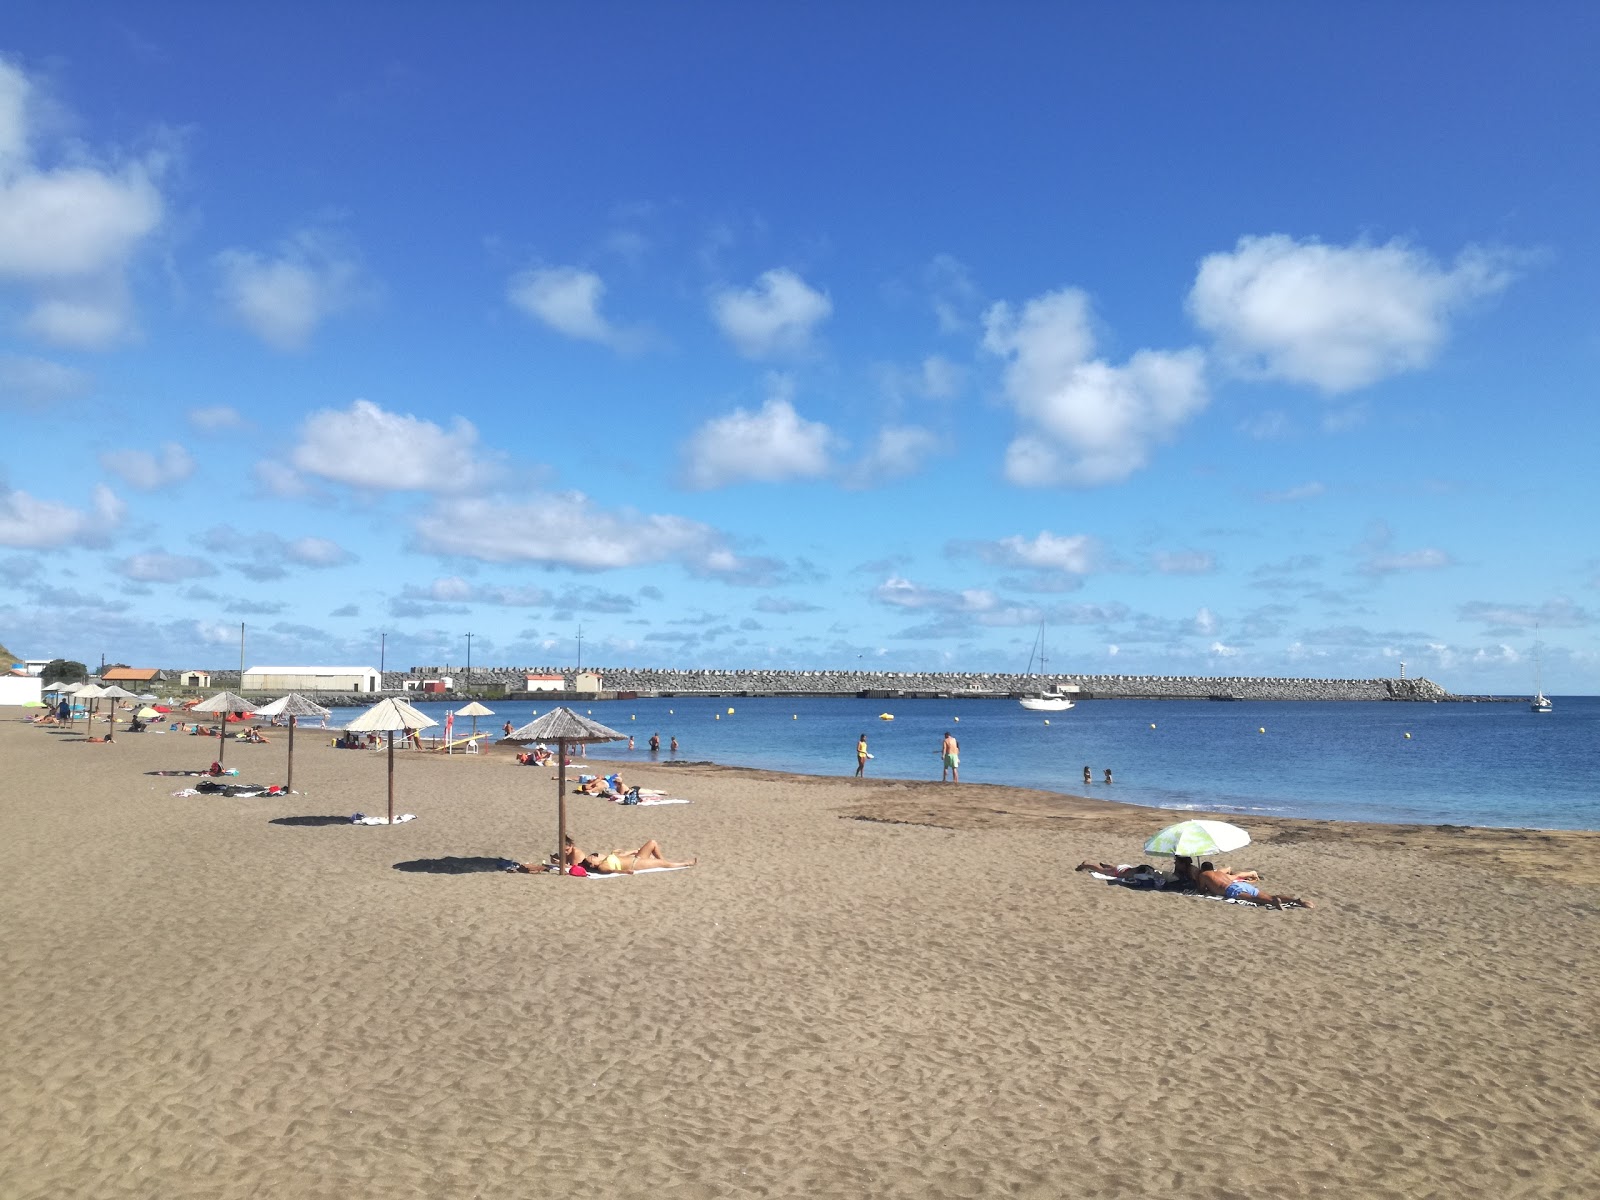 Foto av Praia da Vitoria med grå sand yta